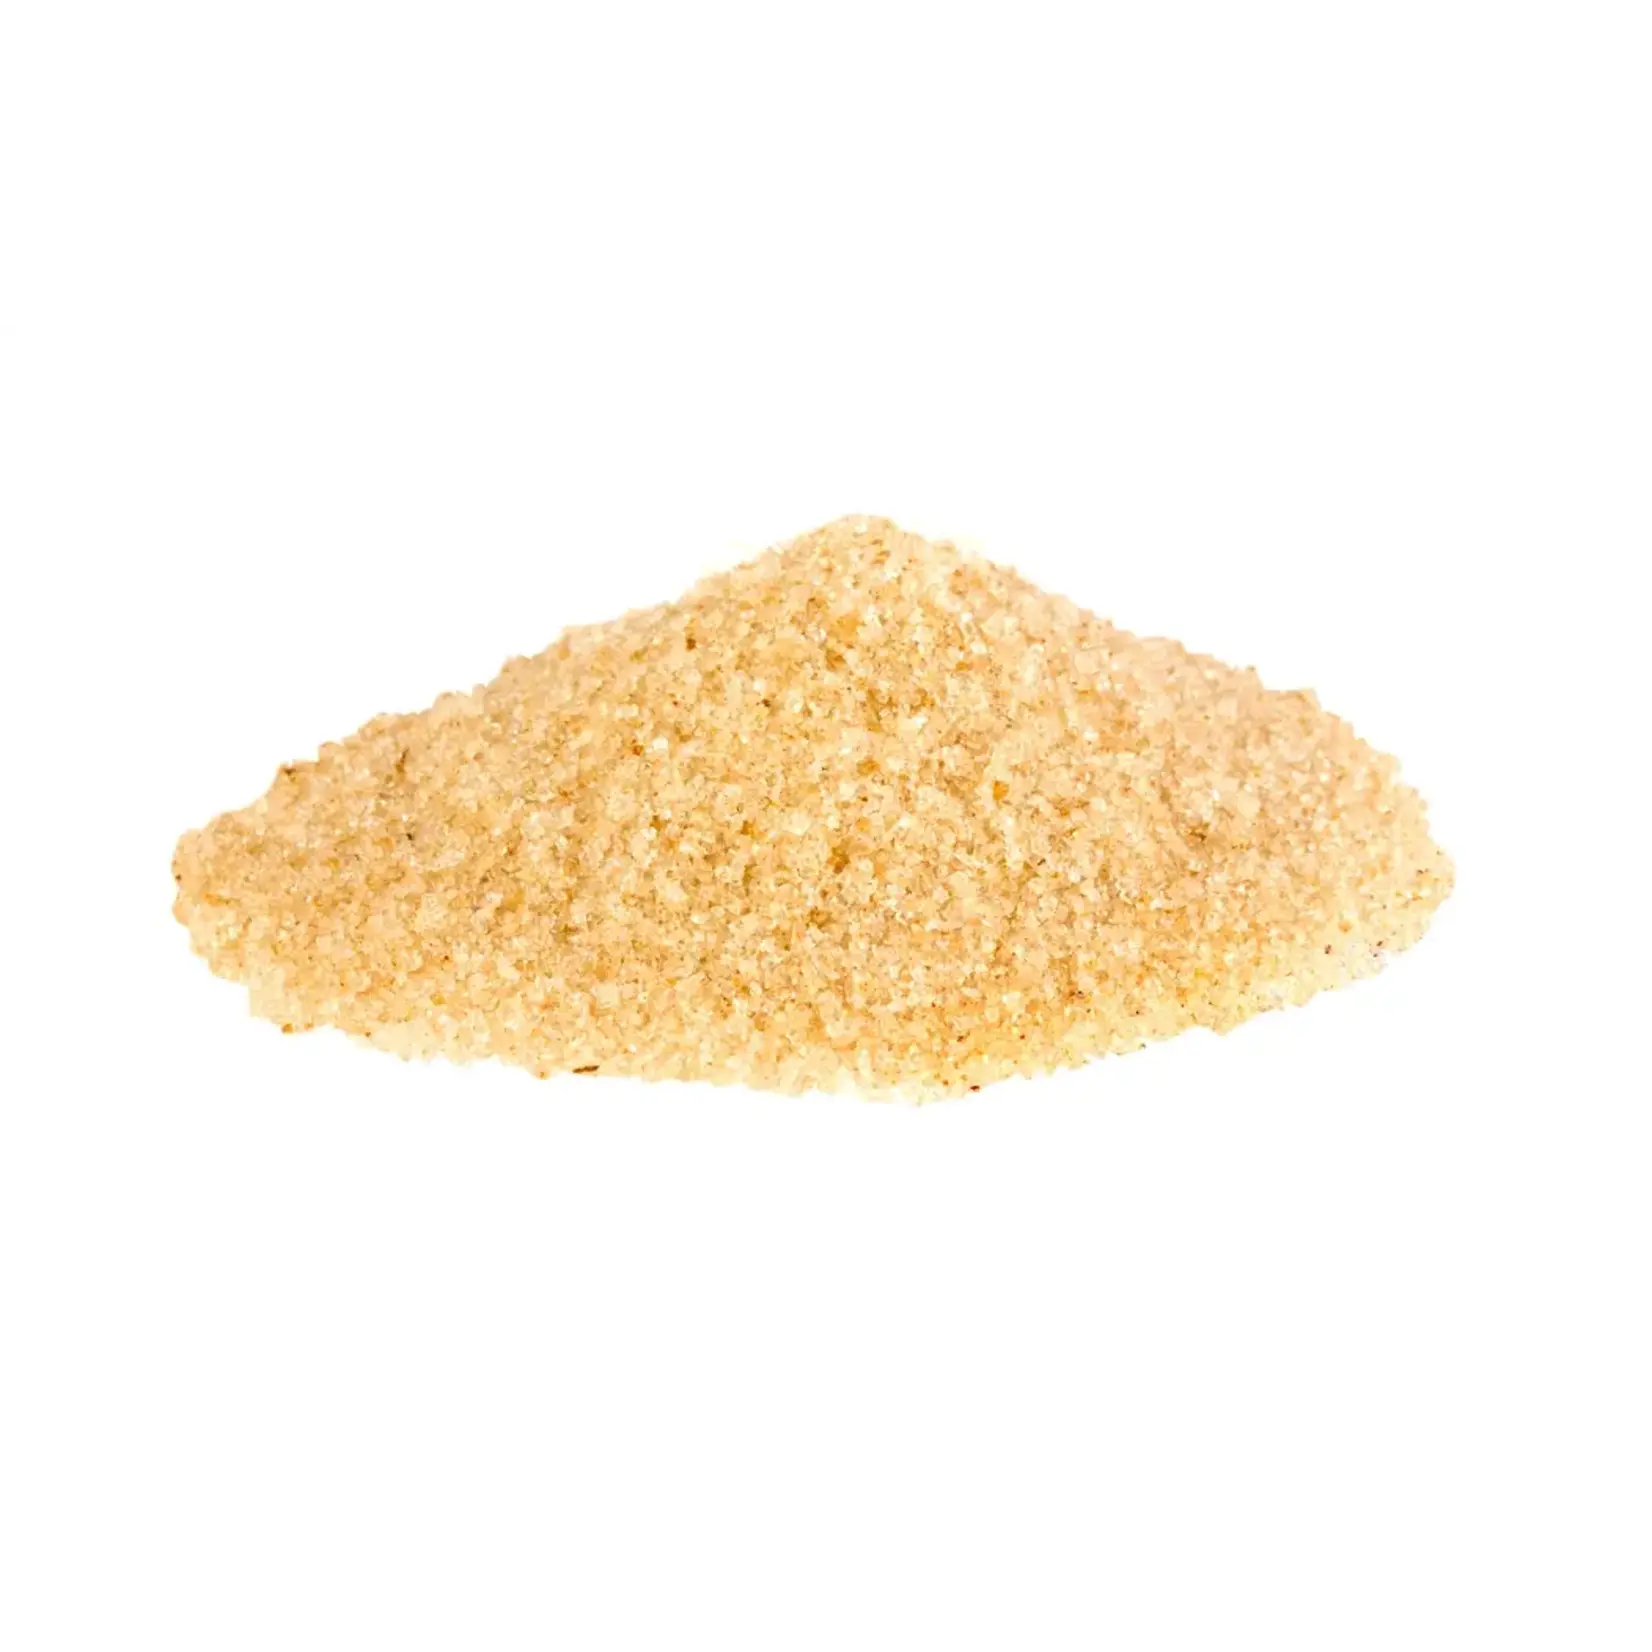 HEPP'S Salt Co Habanero Infused Cane Sugar - 2.5 oz